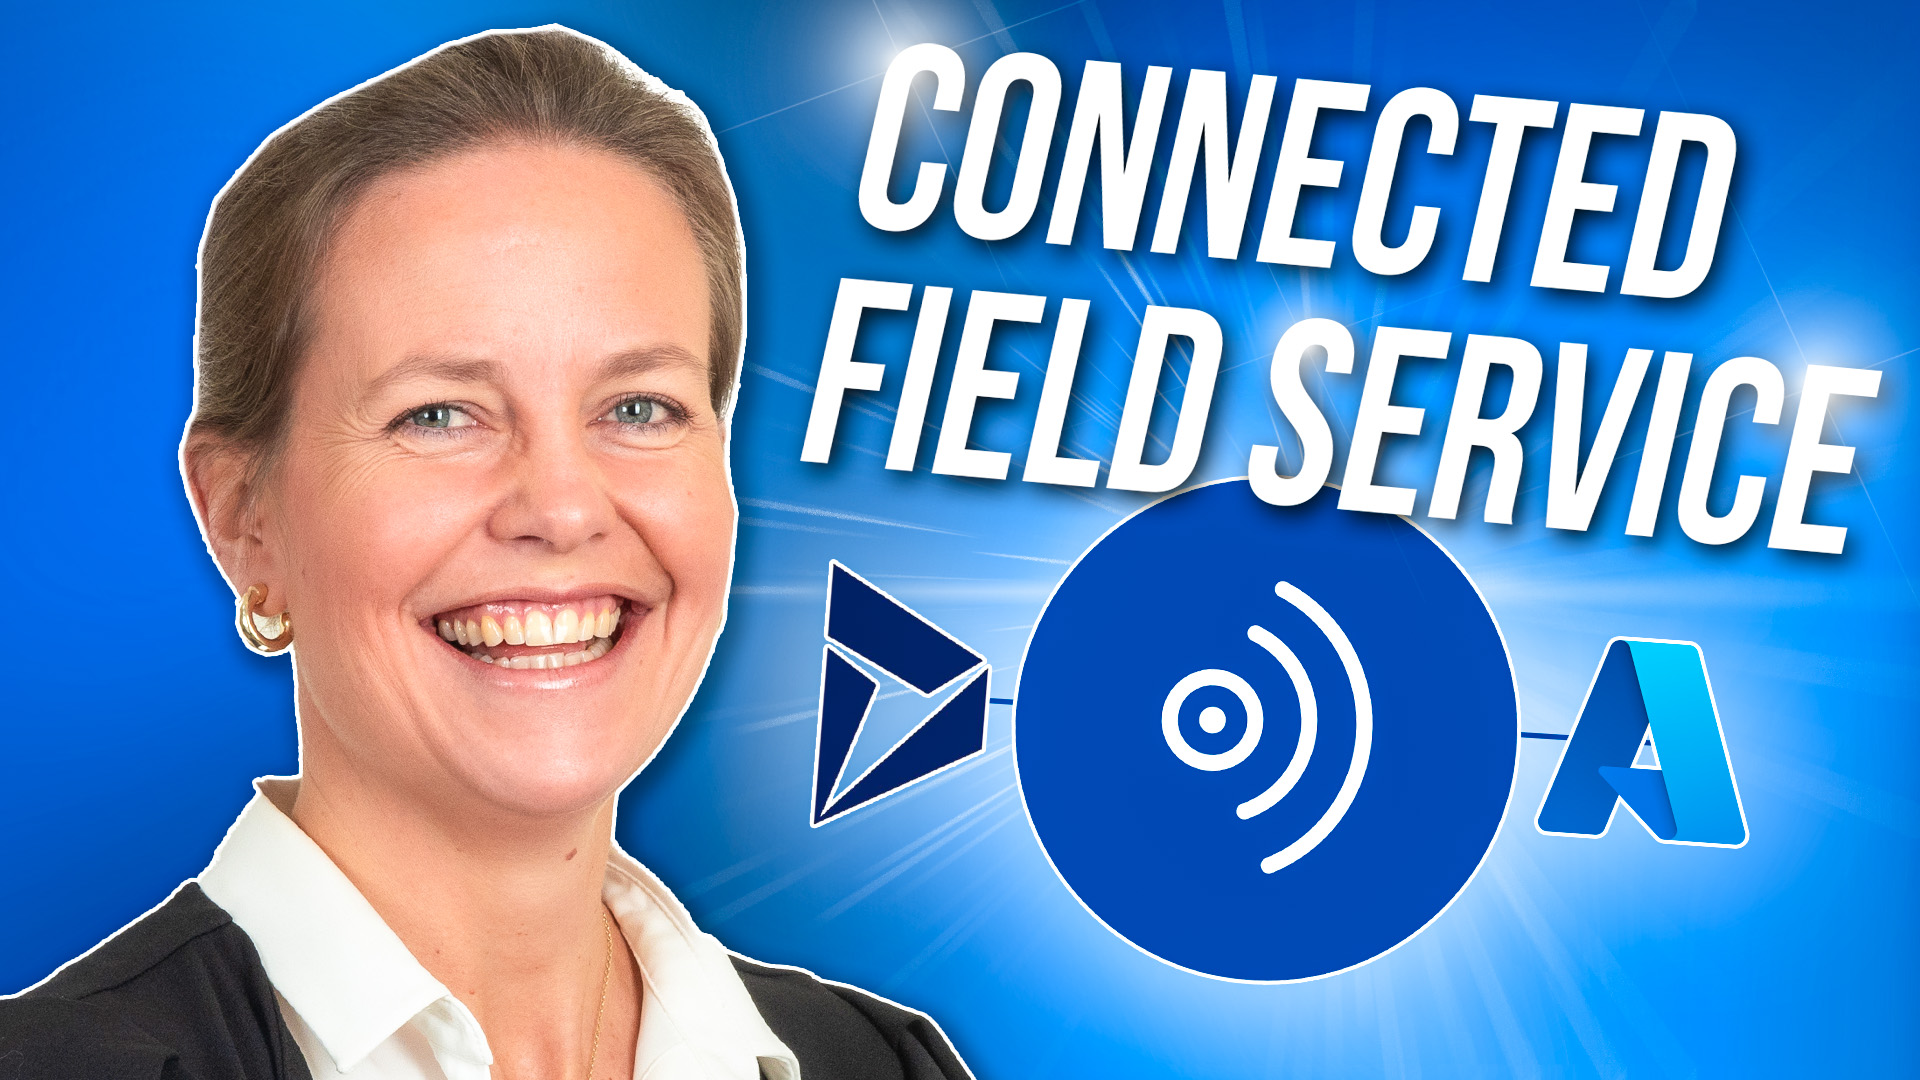 Hva er Dynamics 365 Connected Field Service